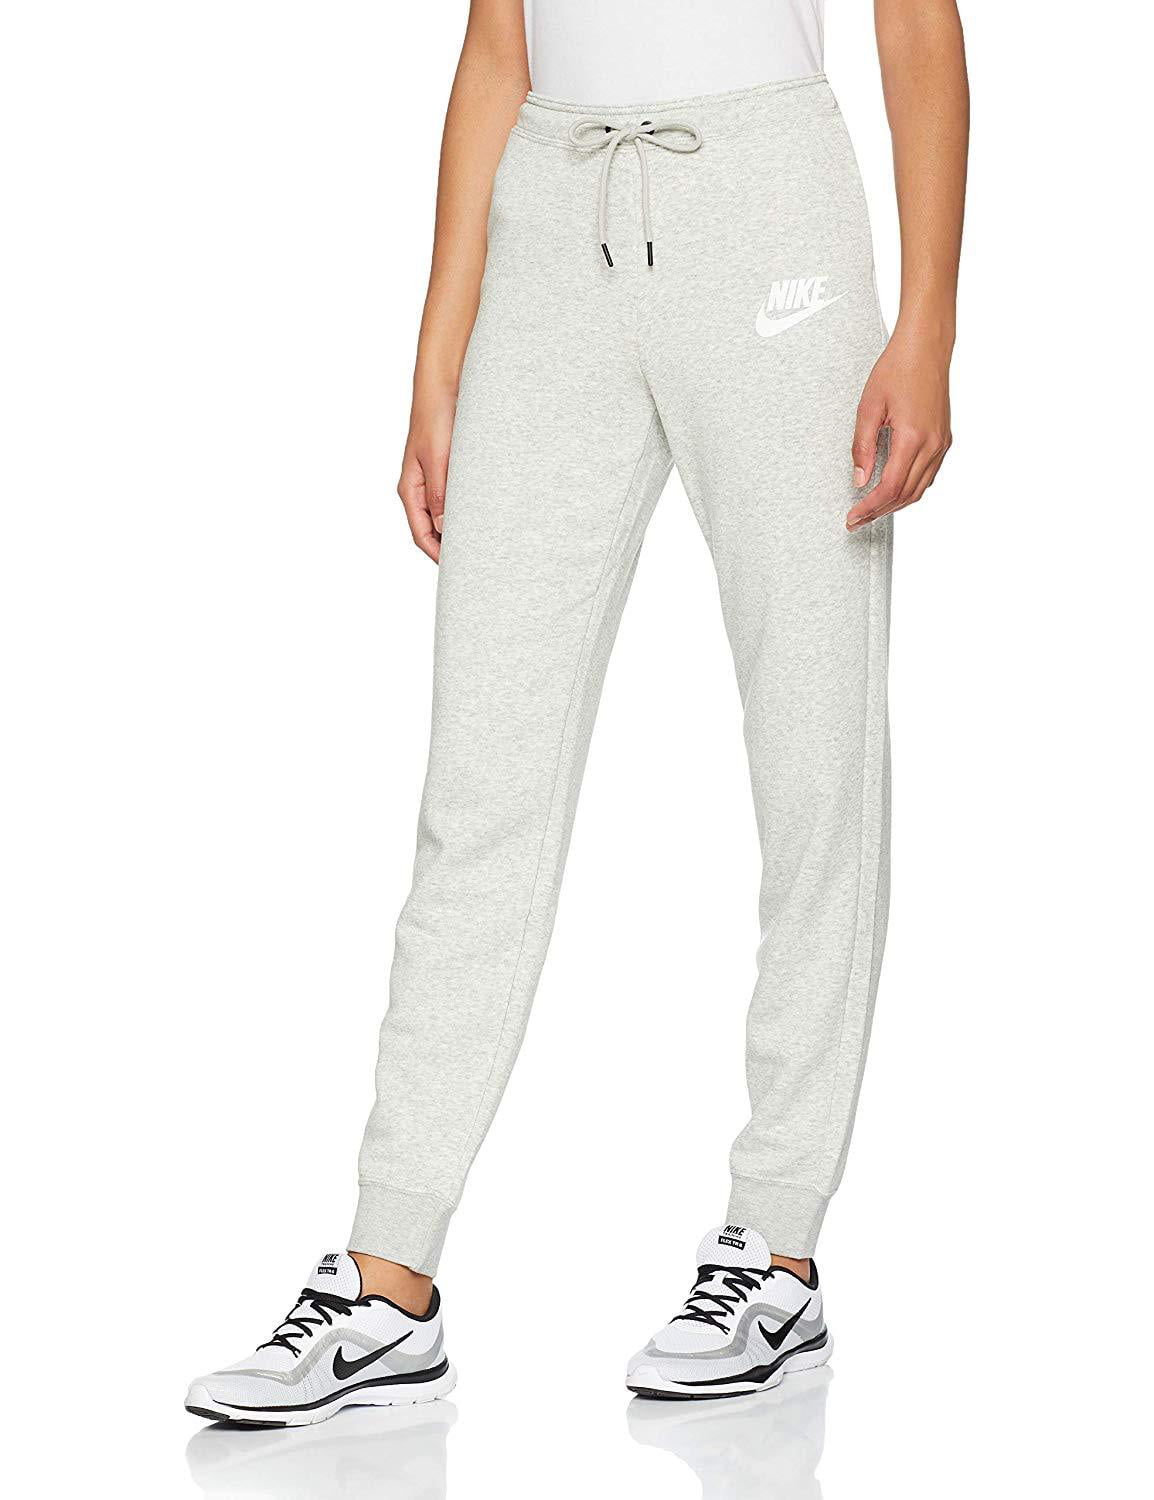 Nike Sportswear Rally Jogger Grey/White-Black 931868-050 - Walmart.com